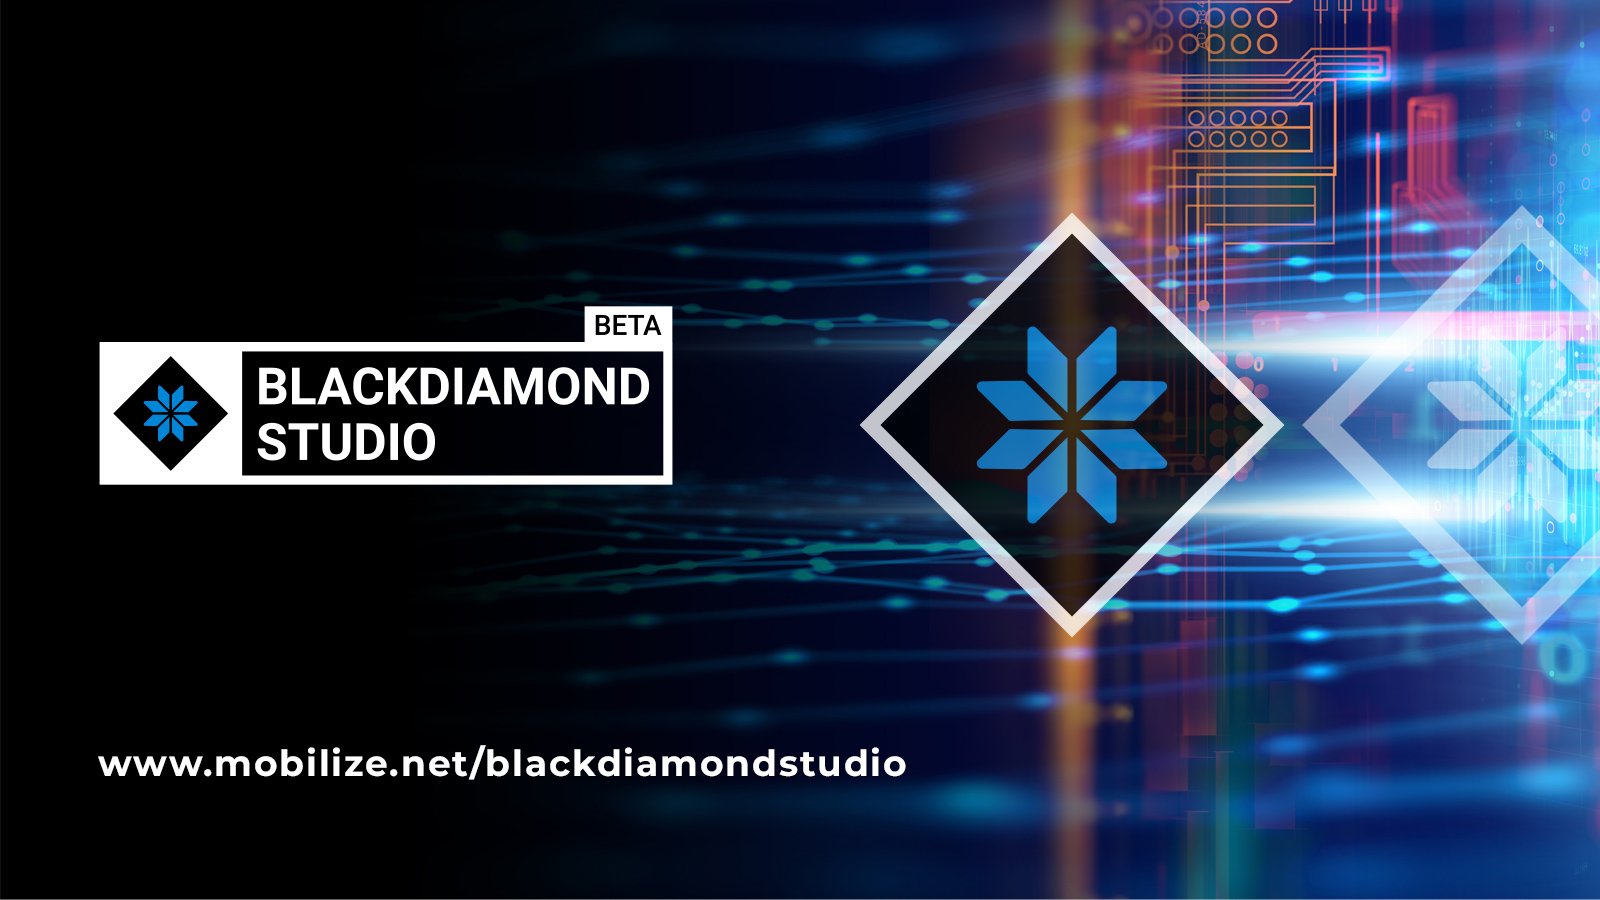 BlackDiamondStudio-background-with-logo-url-1600x900